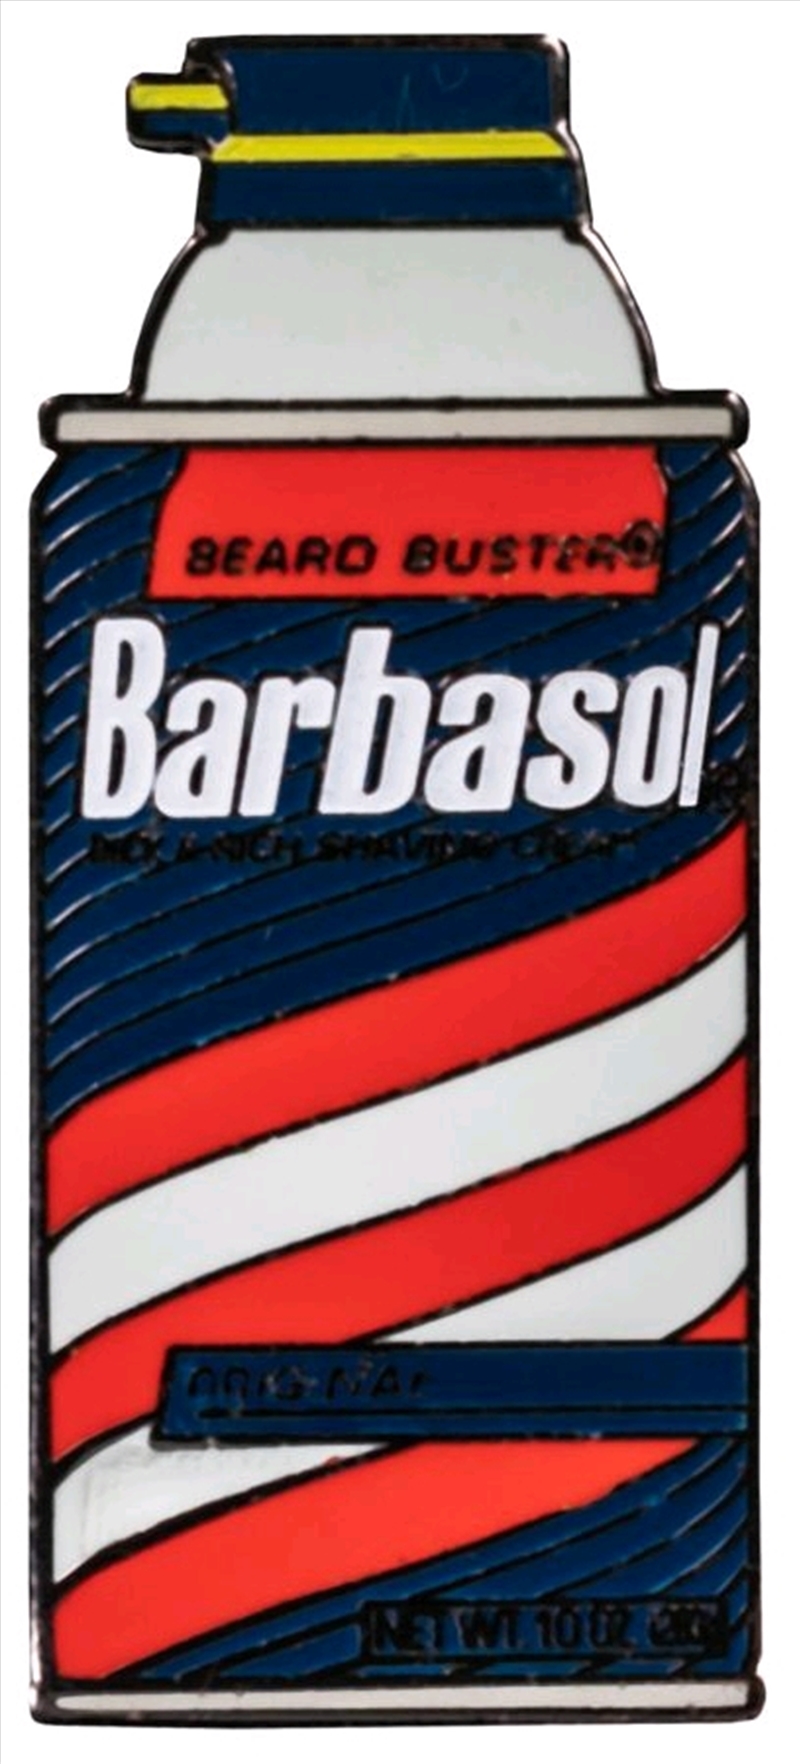 Jurassic Park - Barbasol Shaving Cream Enamel Pin/Product Detail/Buttons & Pins